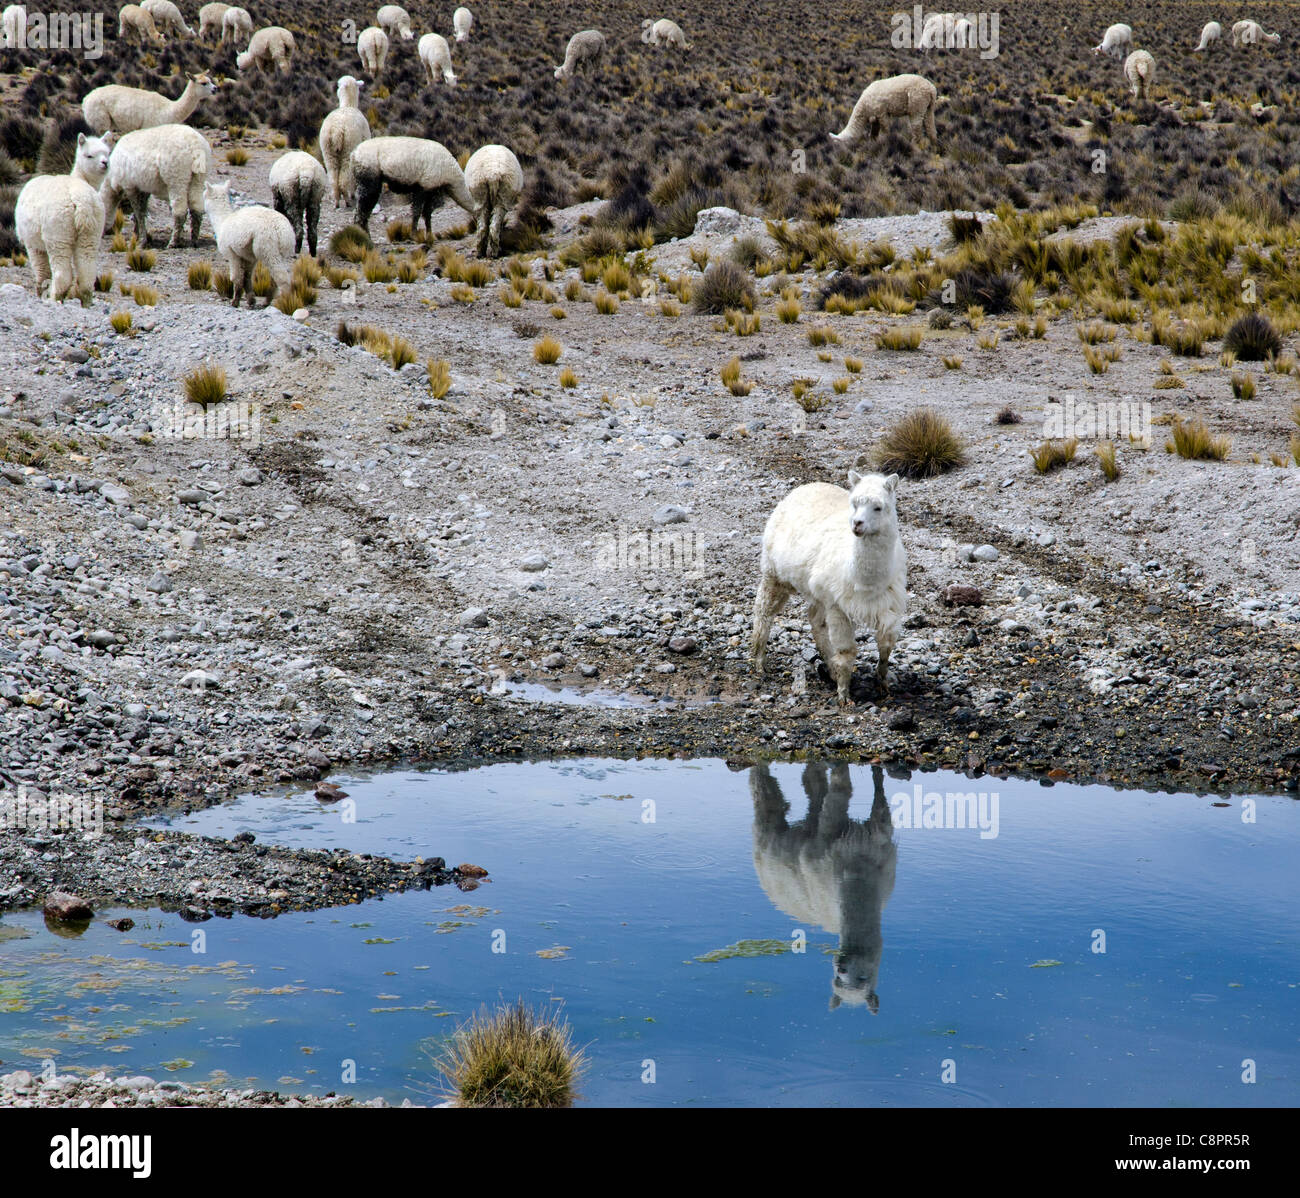 Reflection on the water of an alpaca near Arequipa Peru Stock Photo